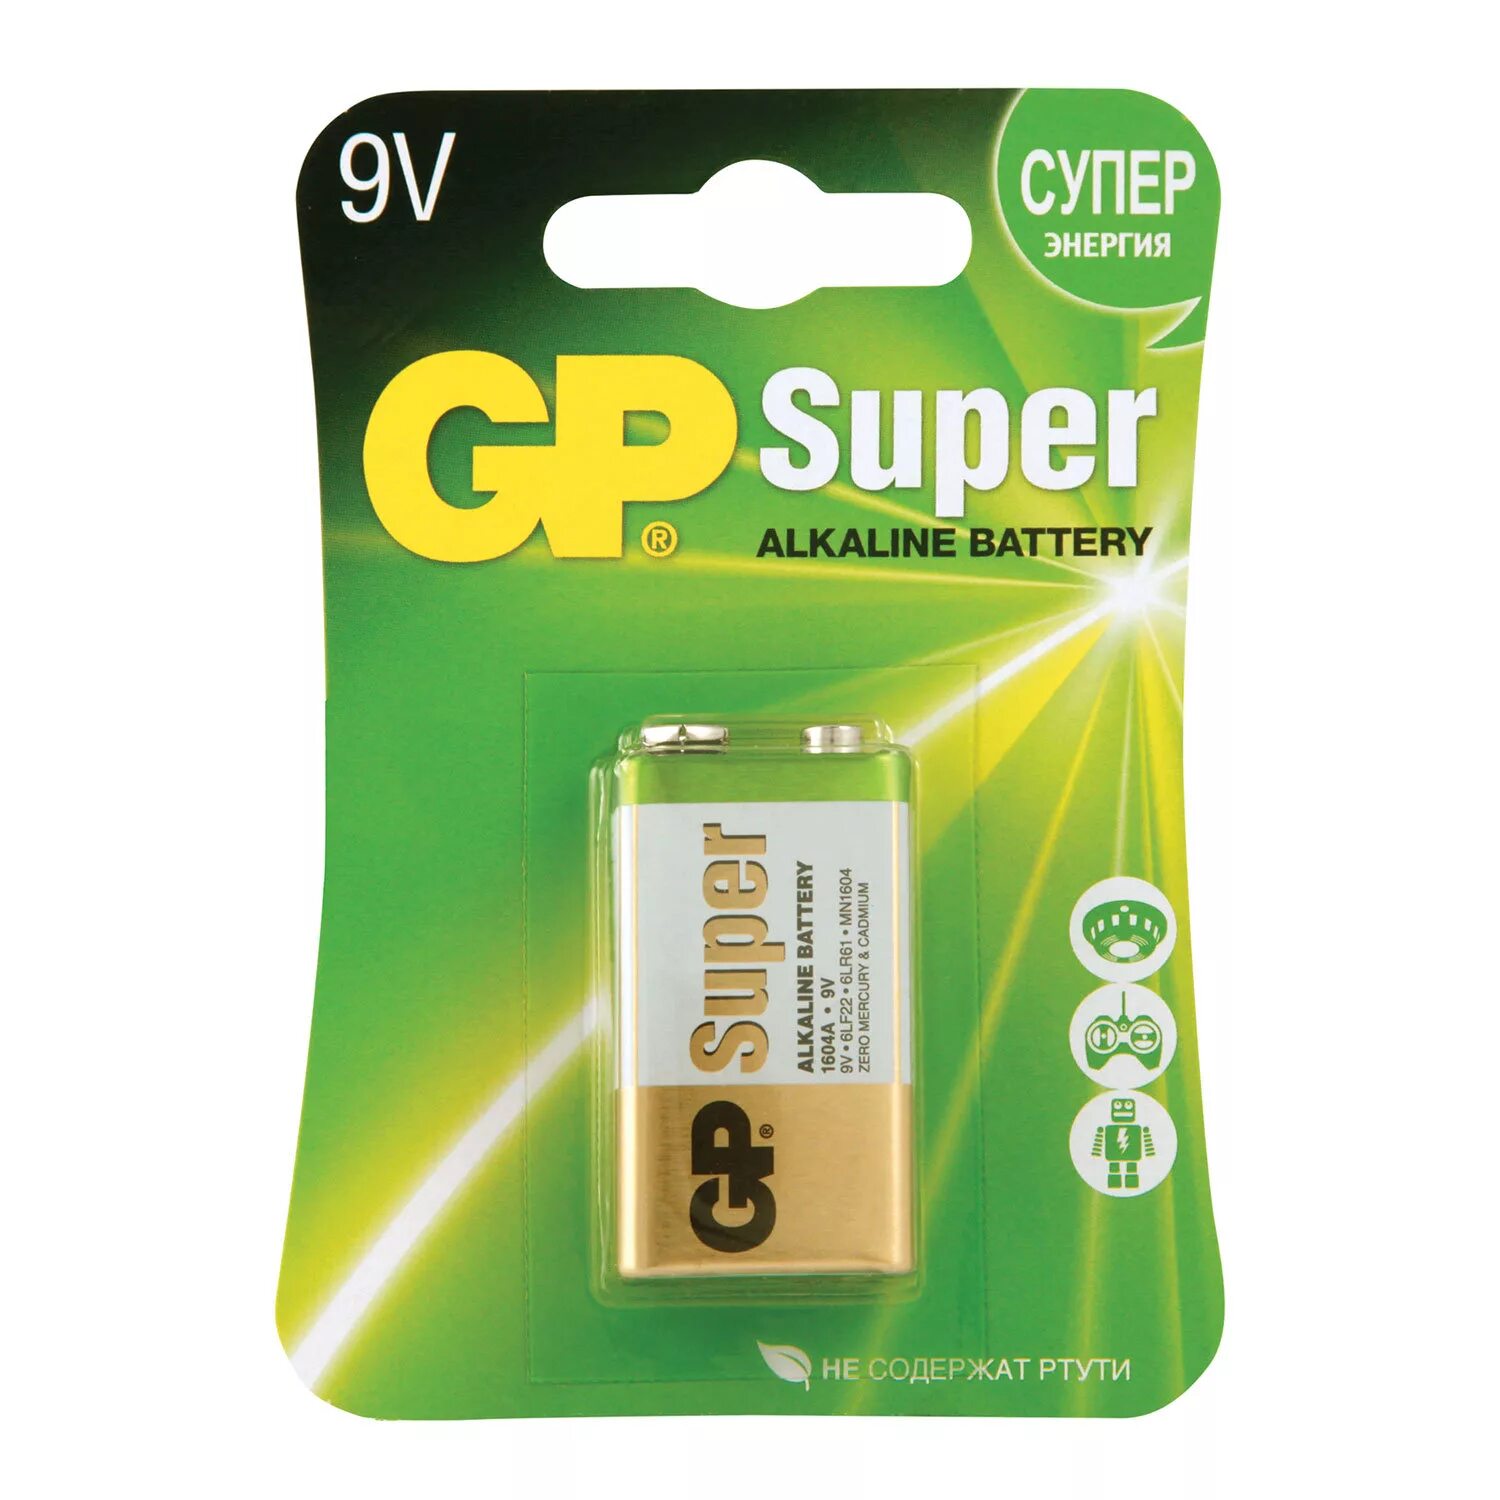 Батарейки GP super Alkaline 1604 (крона, 9v). Батарейка GP super крона 6lr61. Батарейка GP super 1604a-cr1 6lr61 bl1. Батарейка крона GP super 6lr61 bl1 Alkaline 9v (1/10/200).